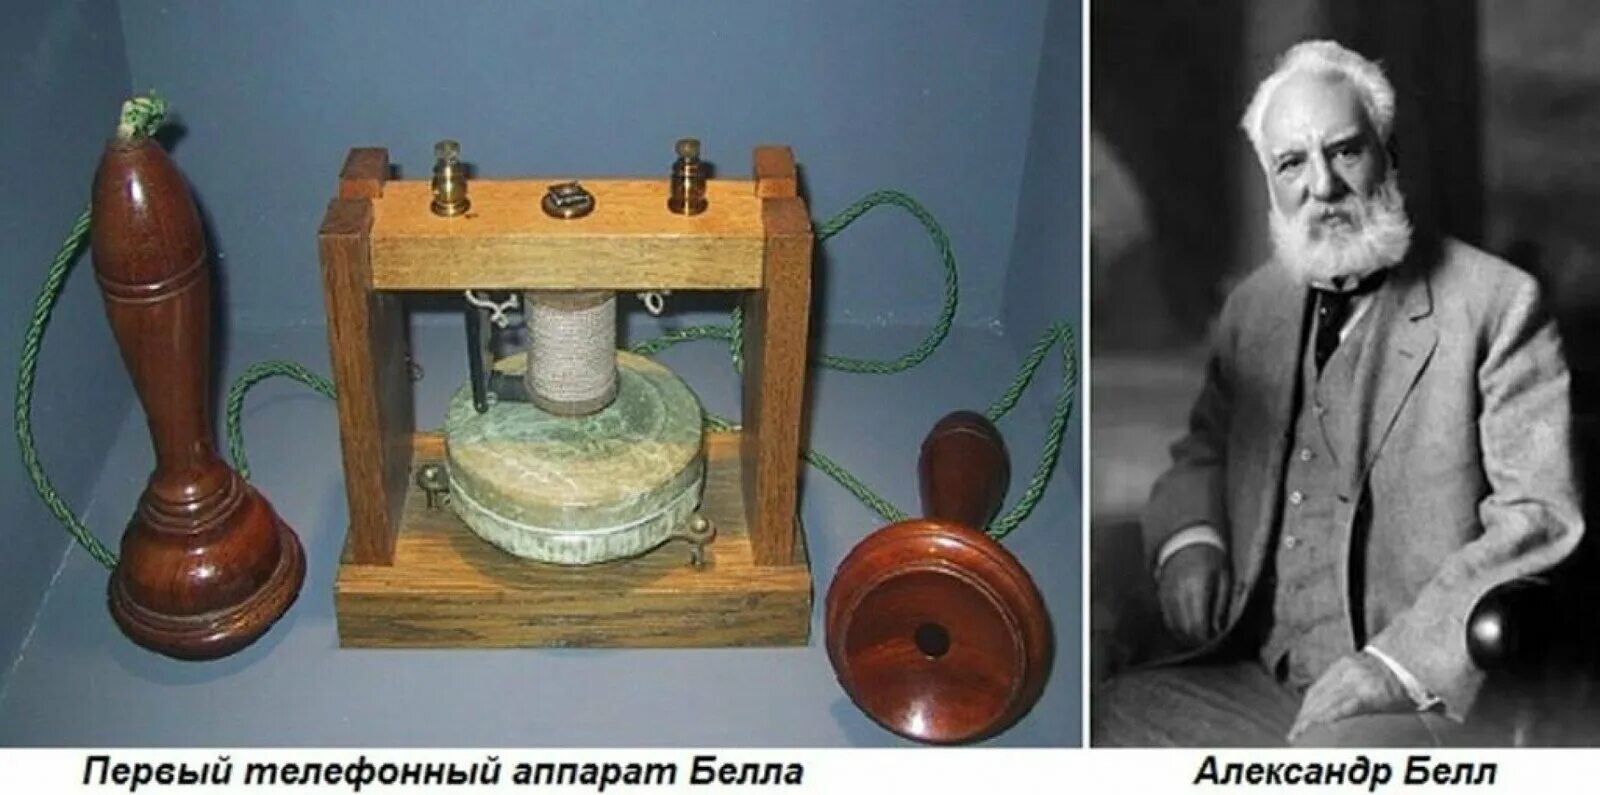 В 1876 году американец а. Белл изобрел телефон.